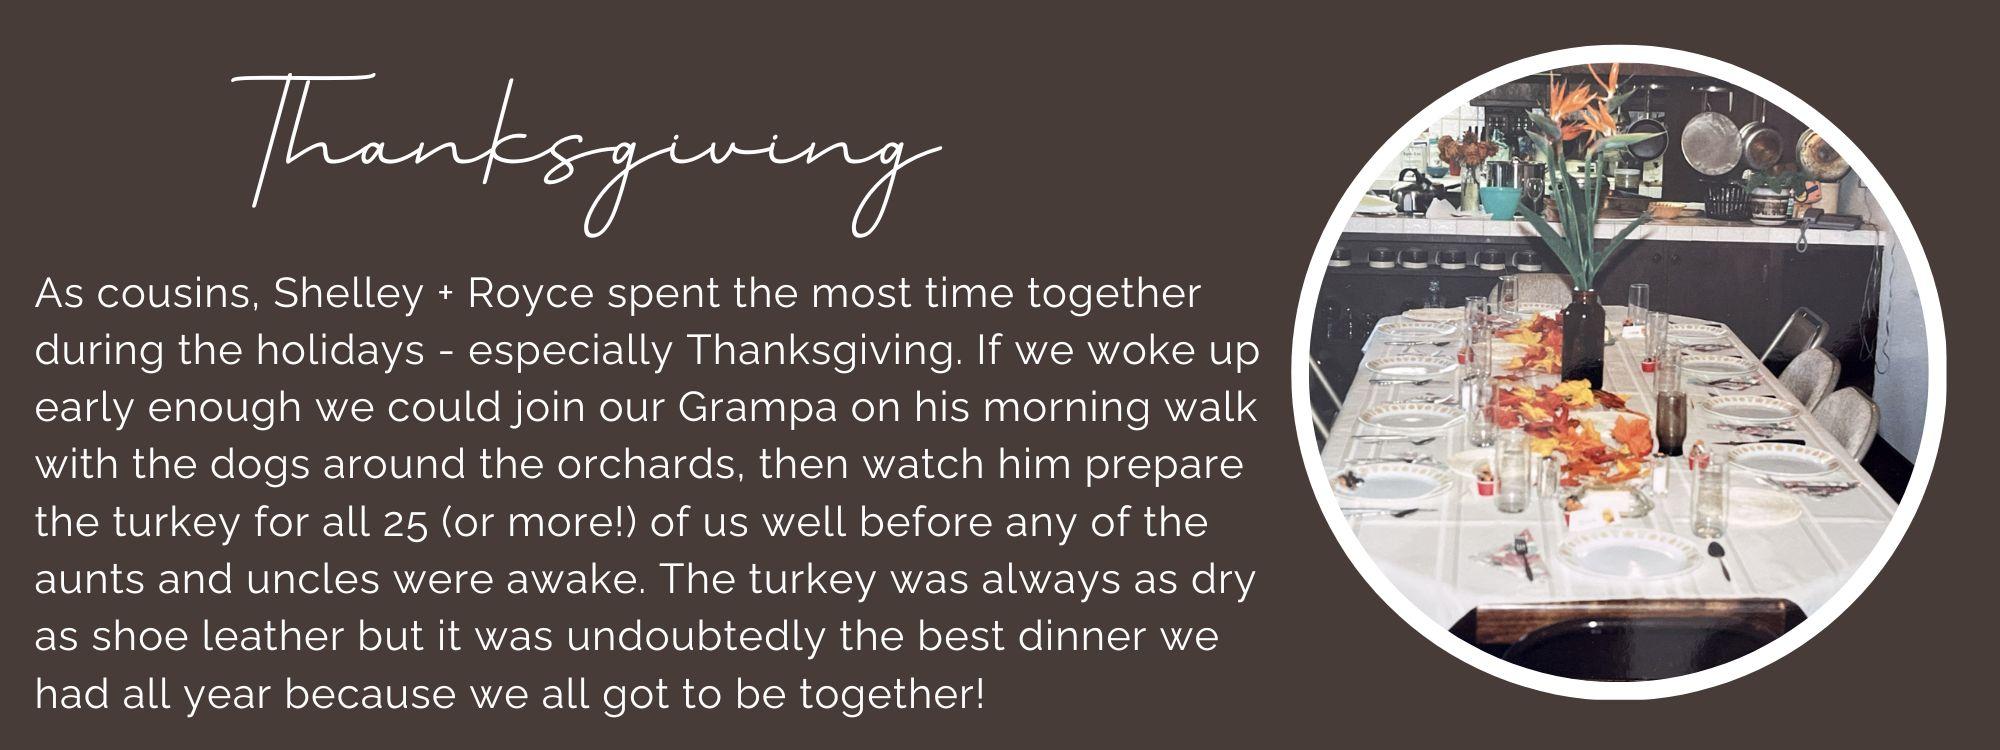 Family Thanksgiving